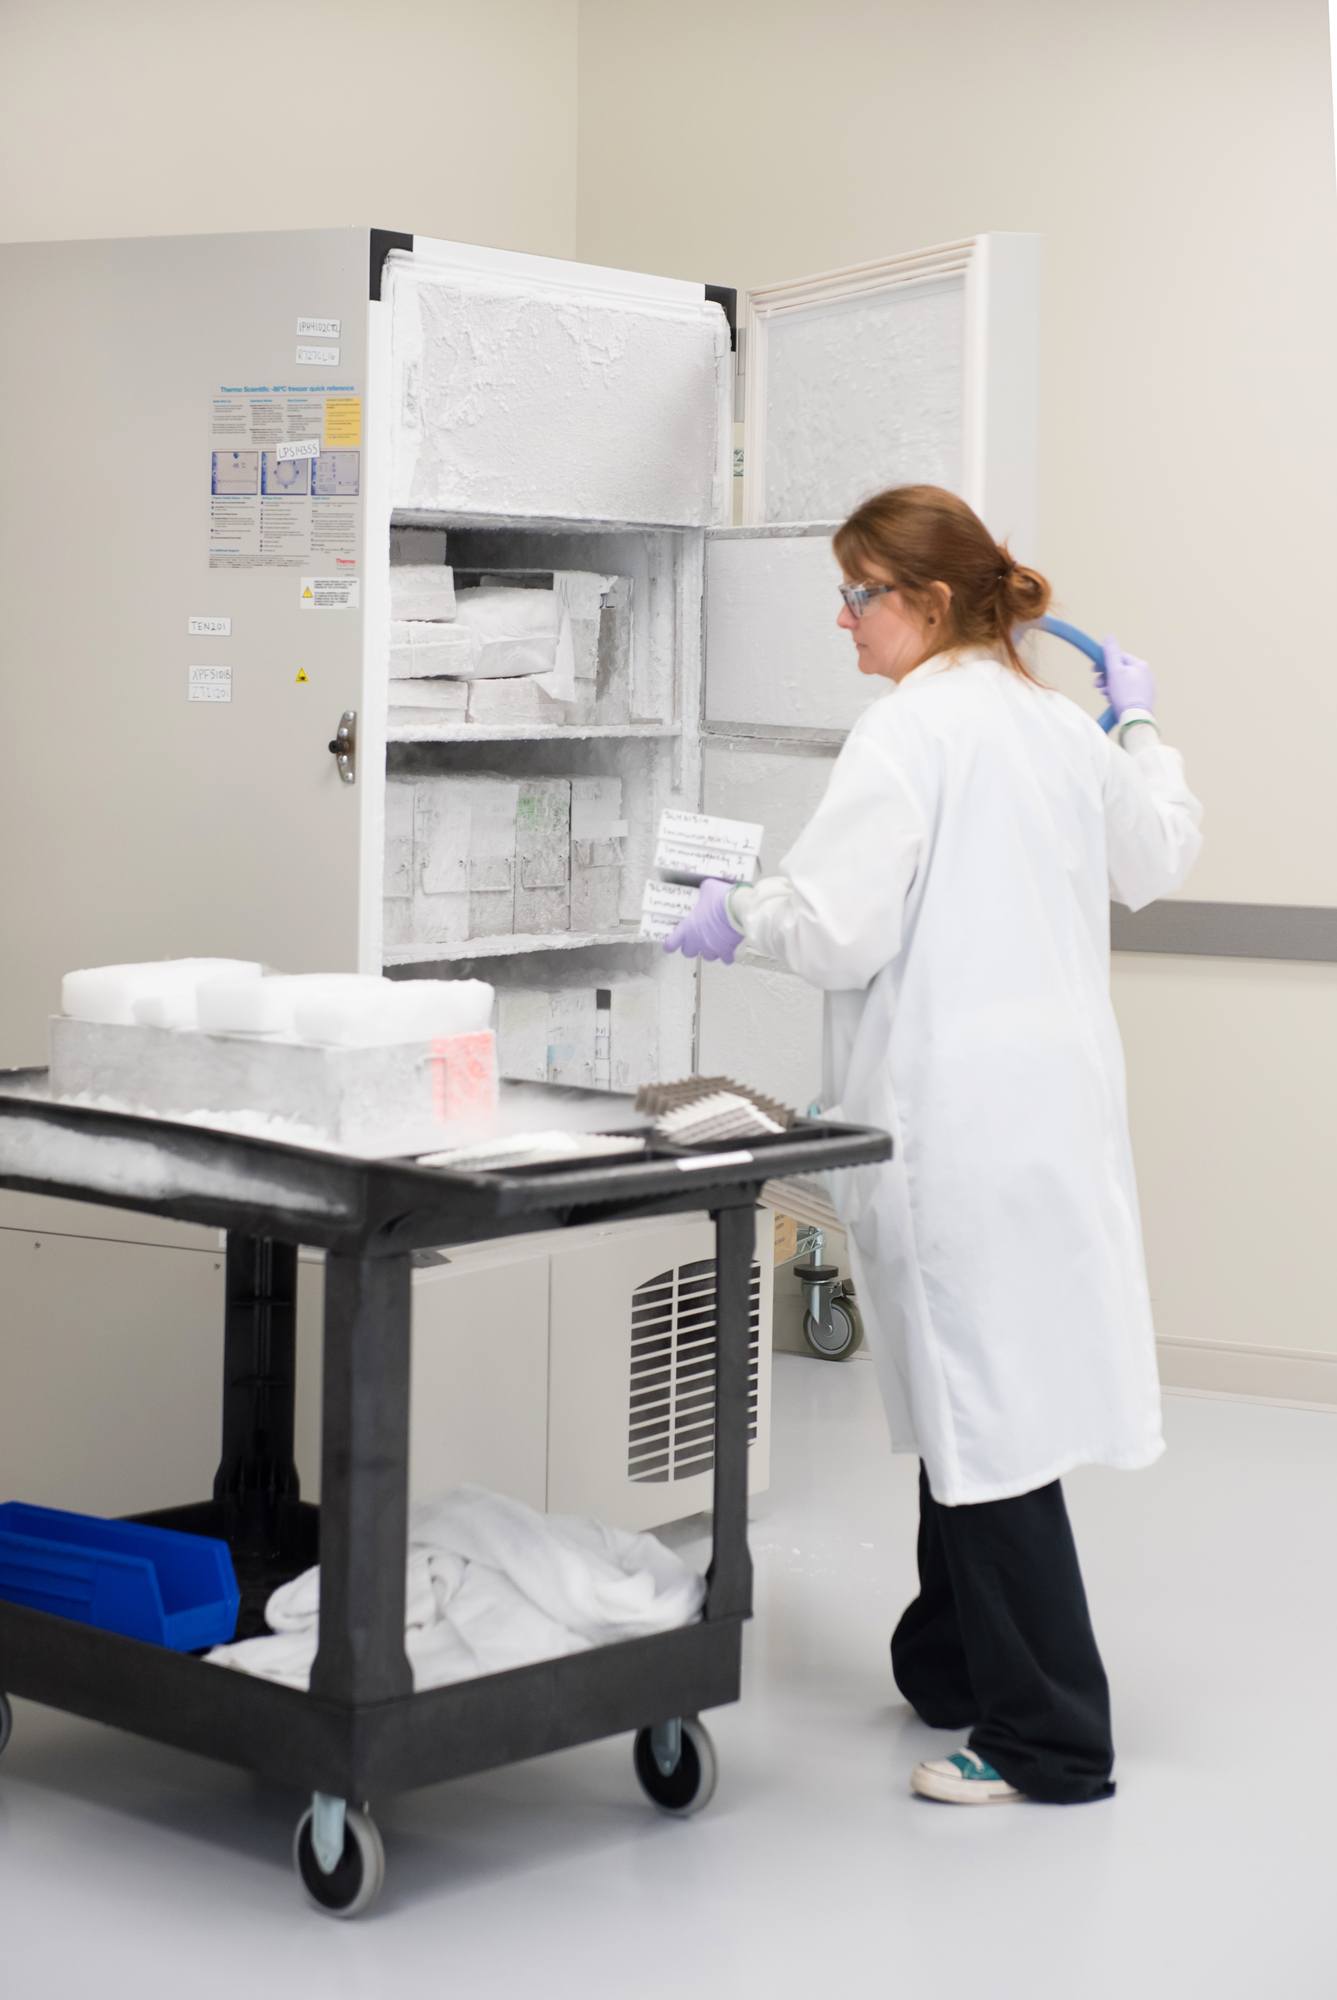 women scientist retrieving samples from fridge